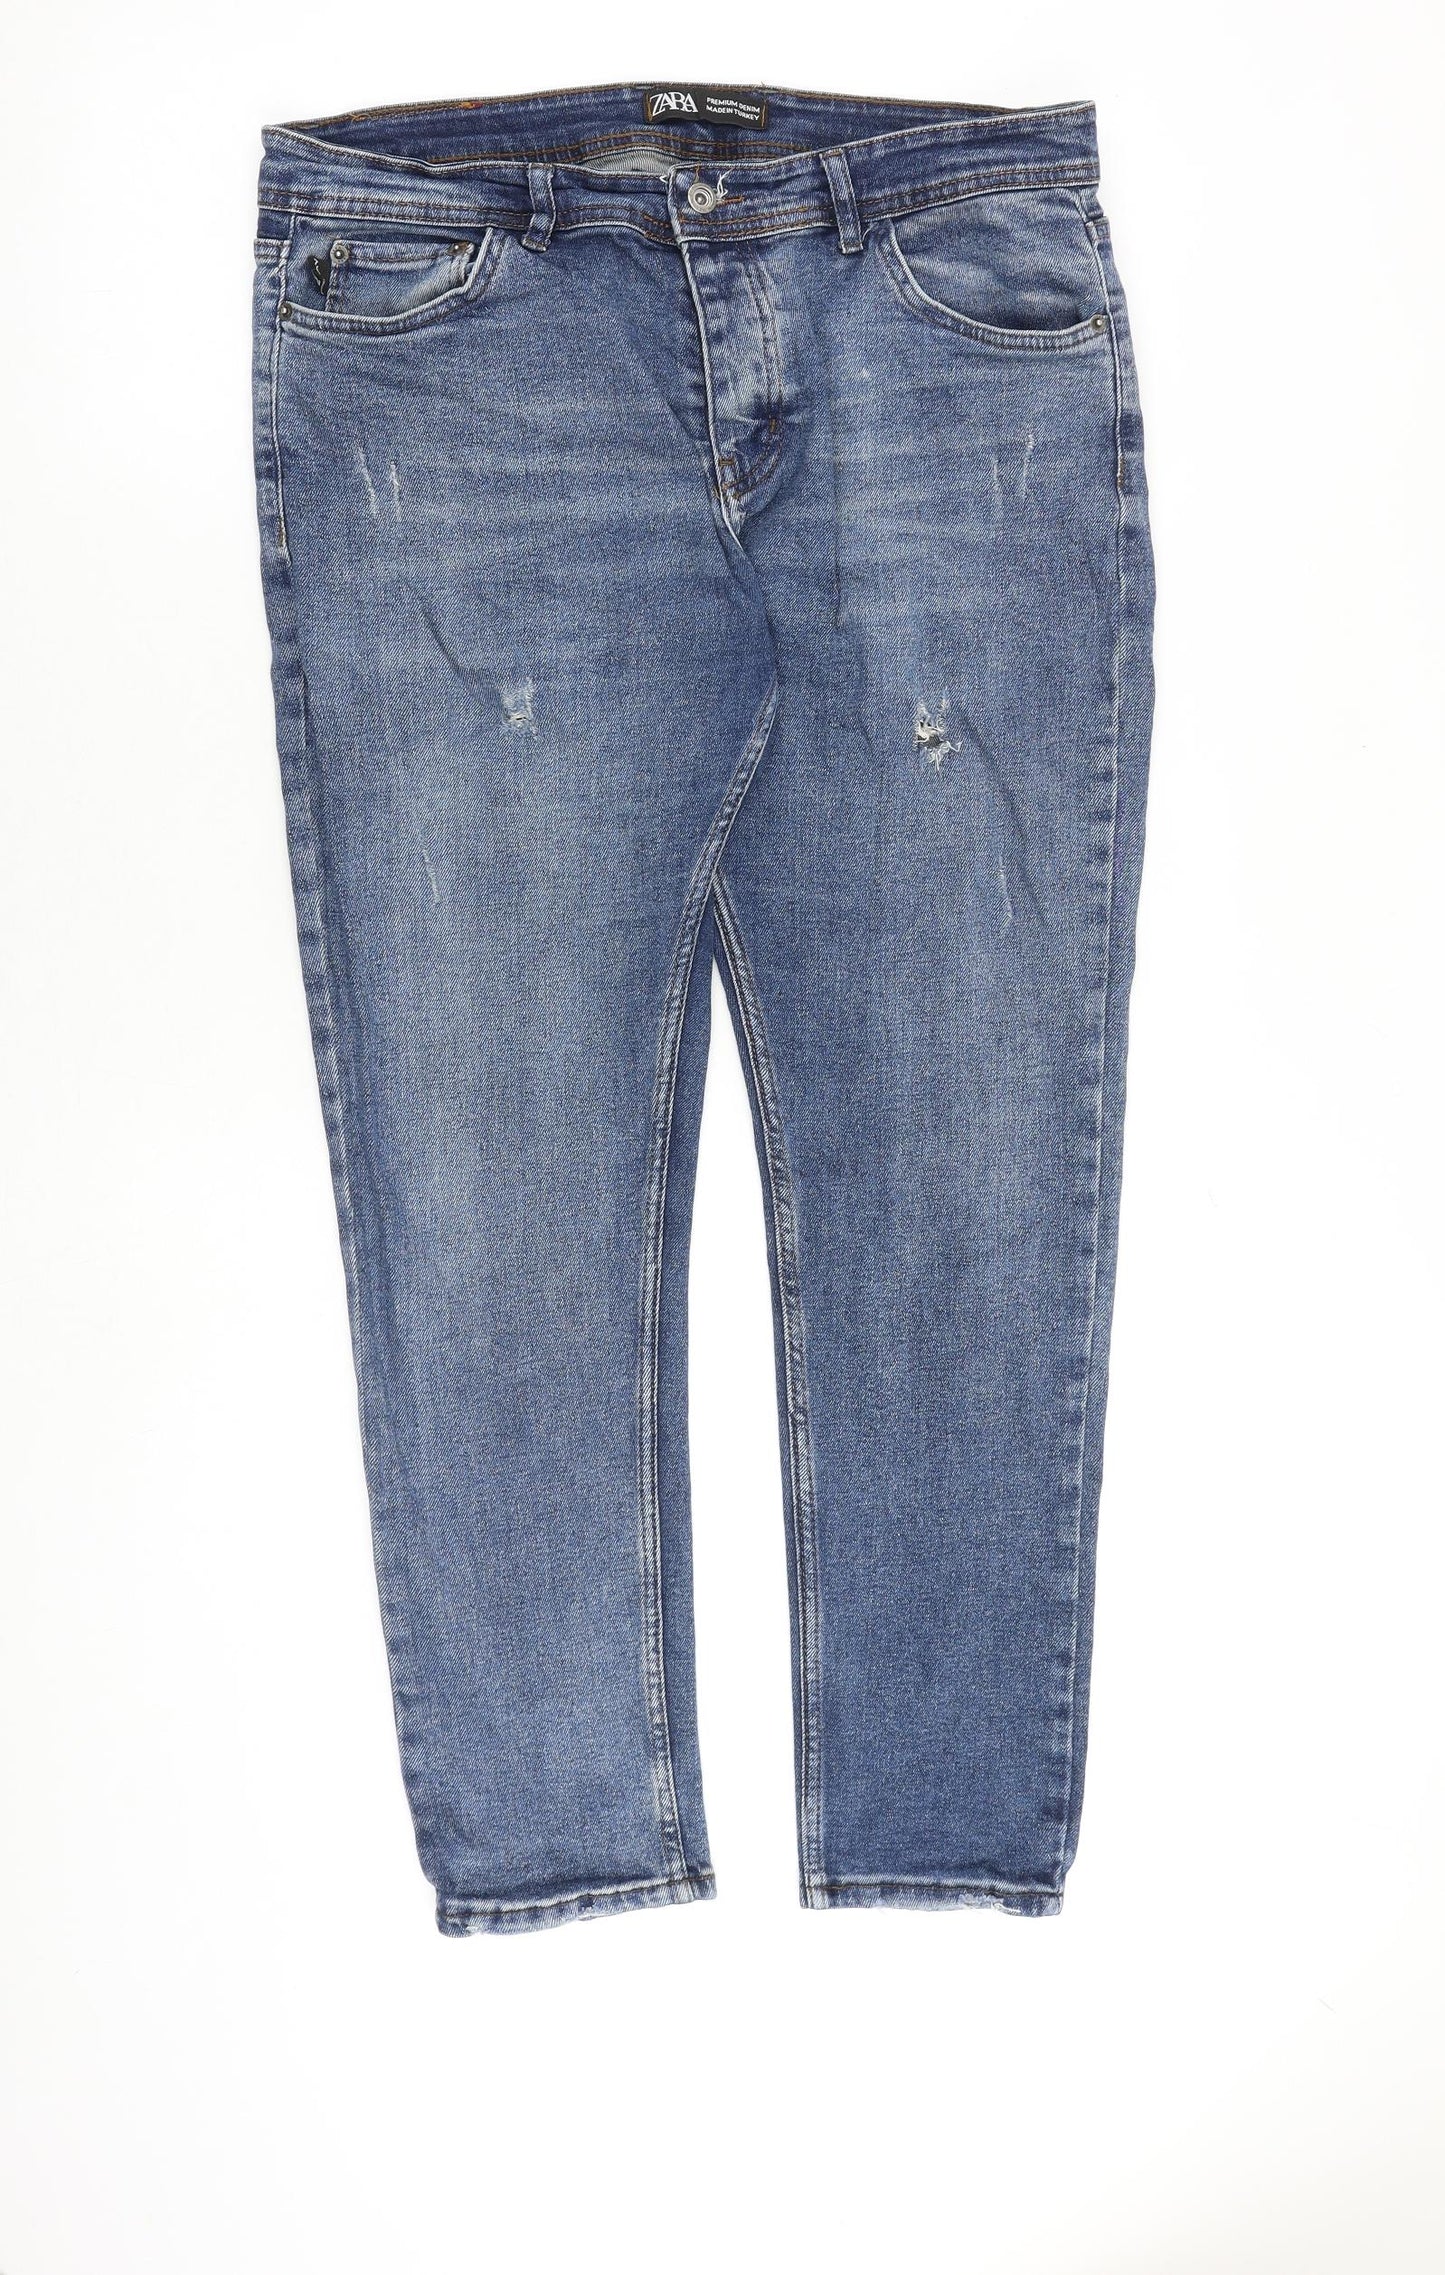 Zara Mens Blue Cotton Tapered Jeans Size 36 in L29 in Regular Zip